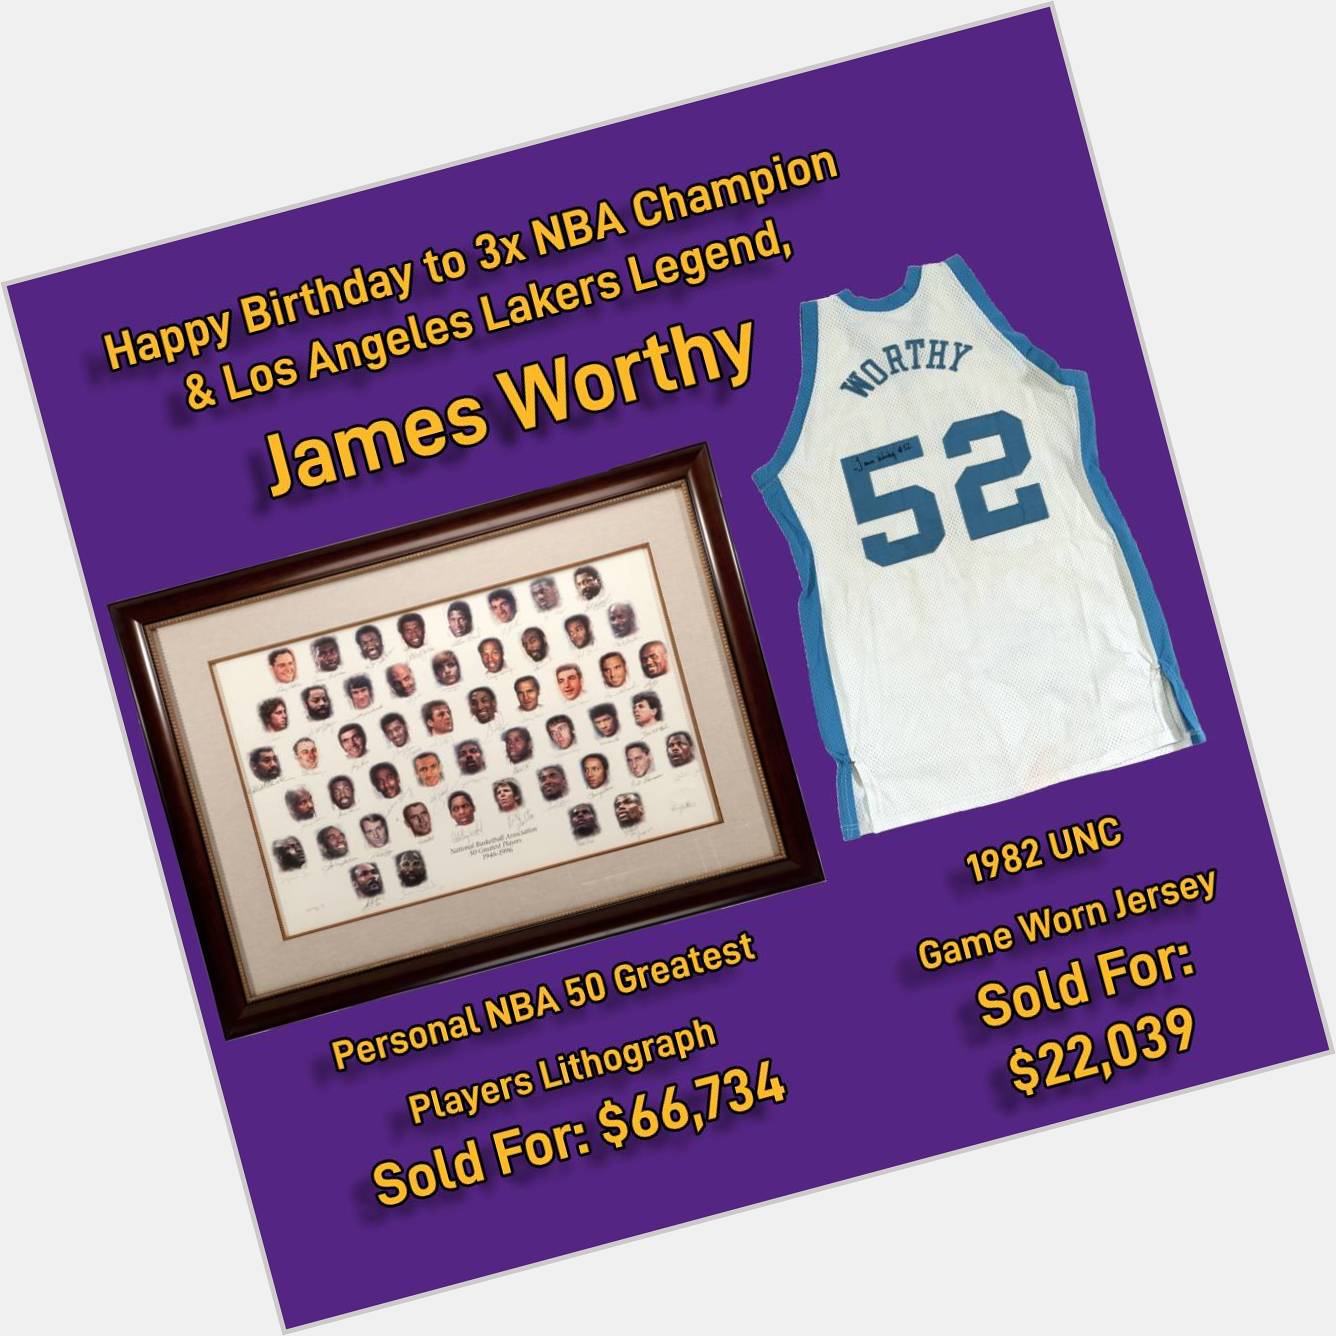 Happy 59th Birthday to James Worthy!   